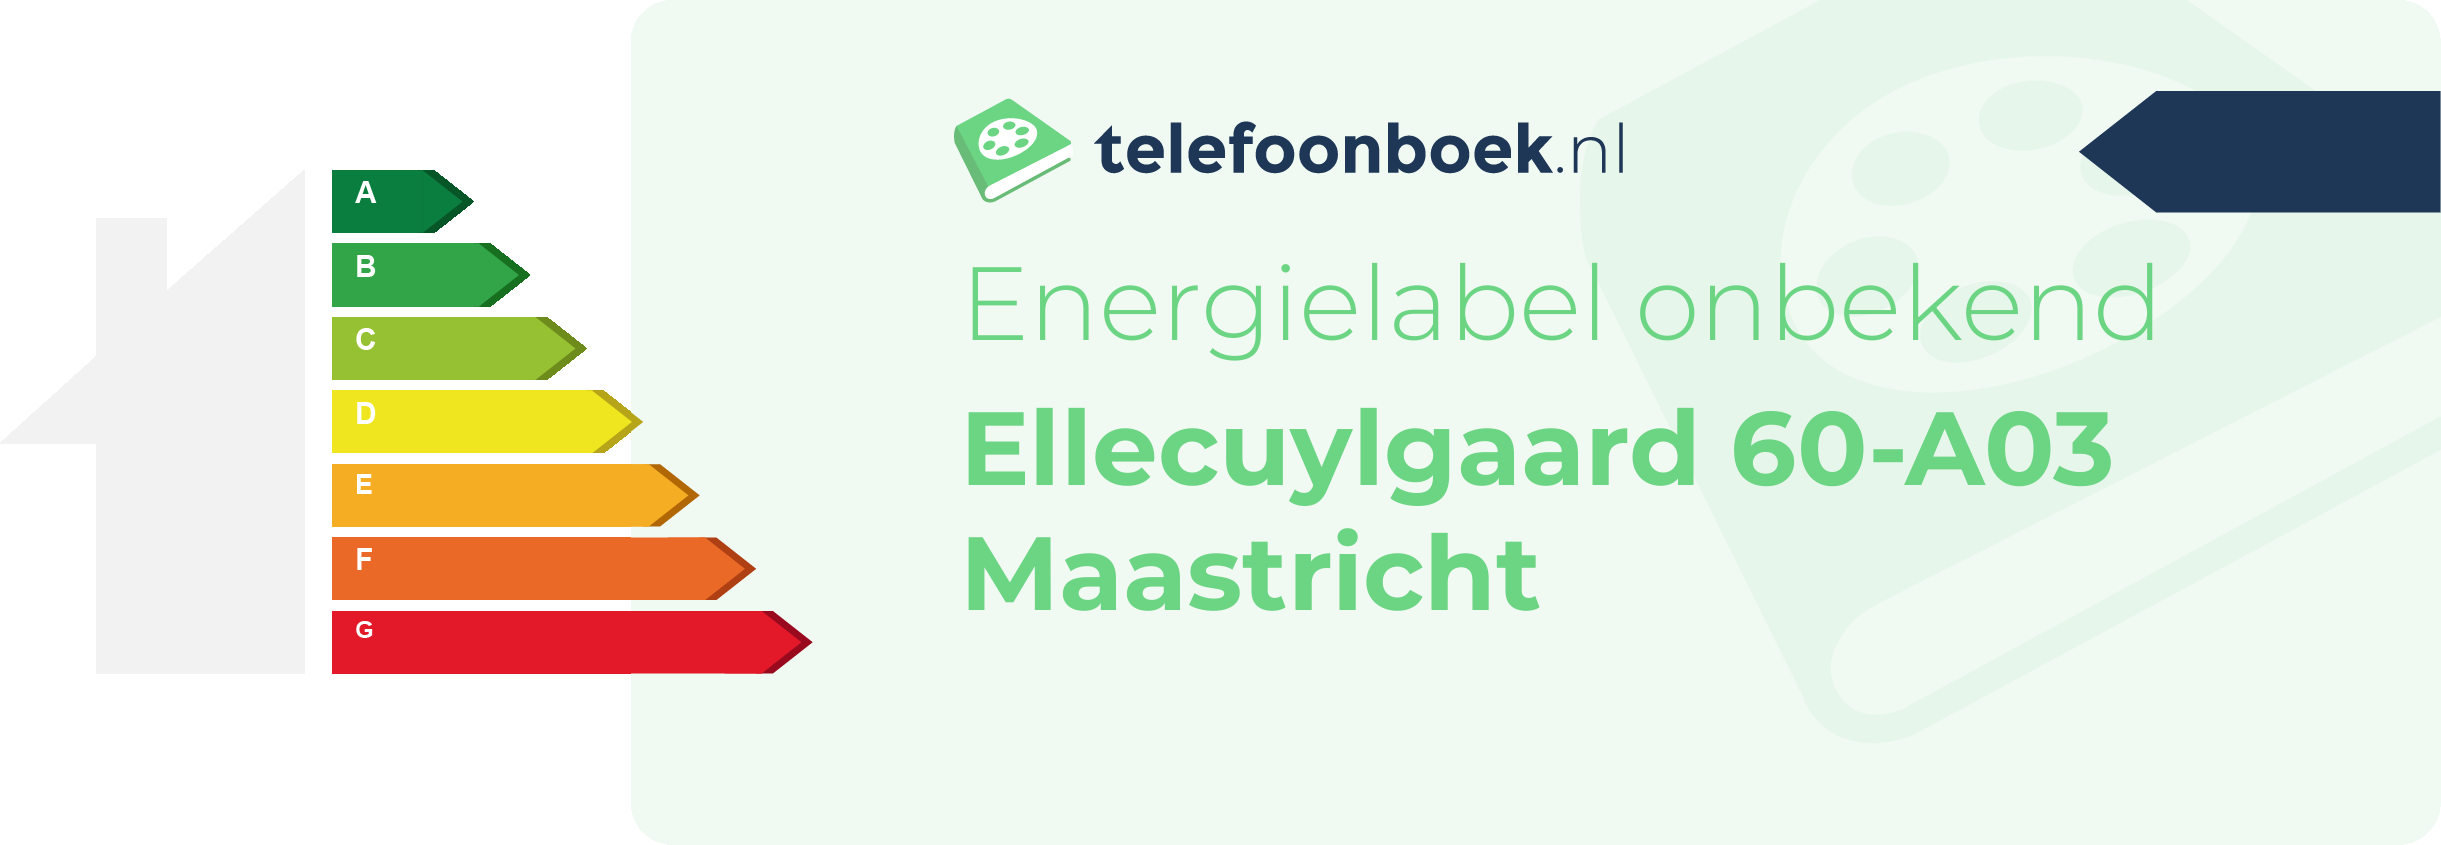 Energielabel Ellecuylgaard 60-A03 Maastricht